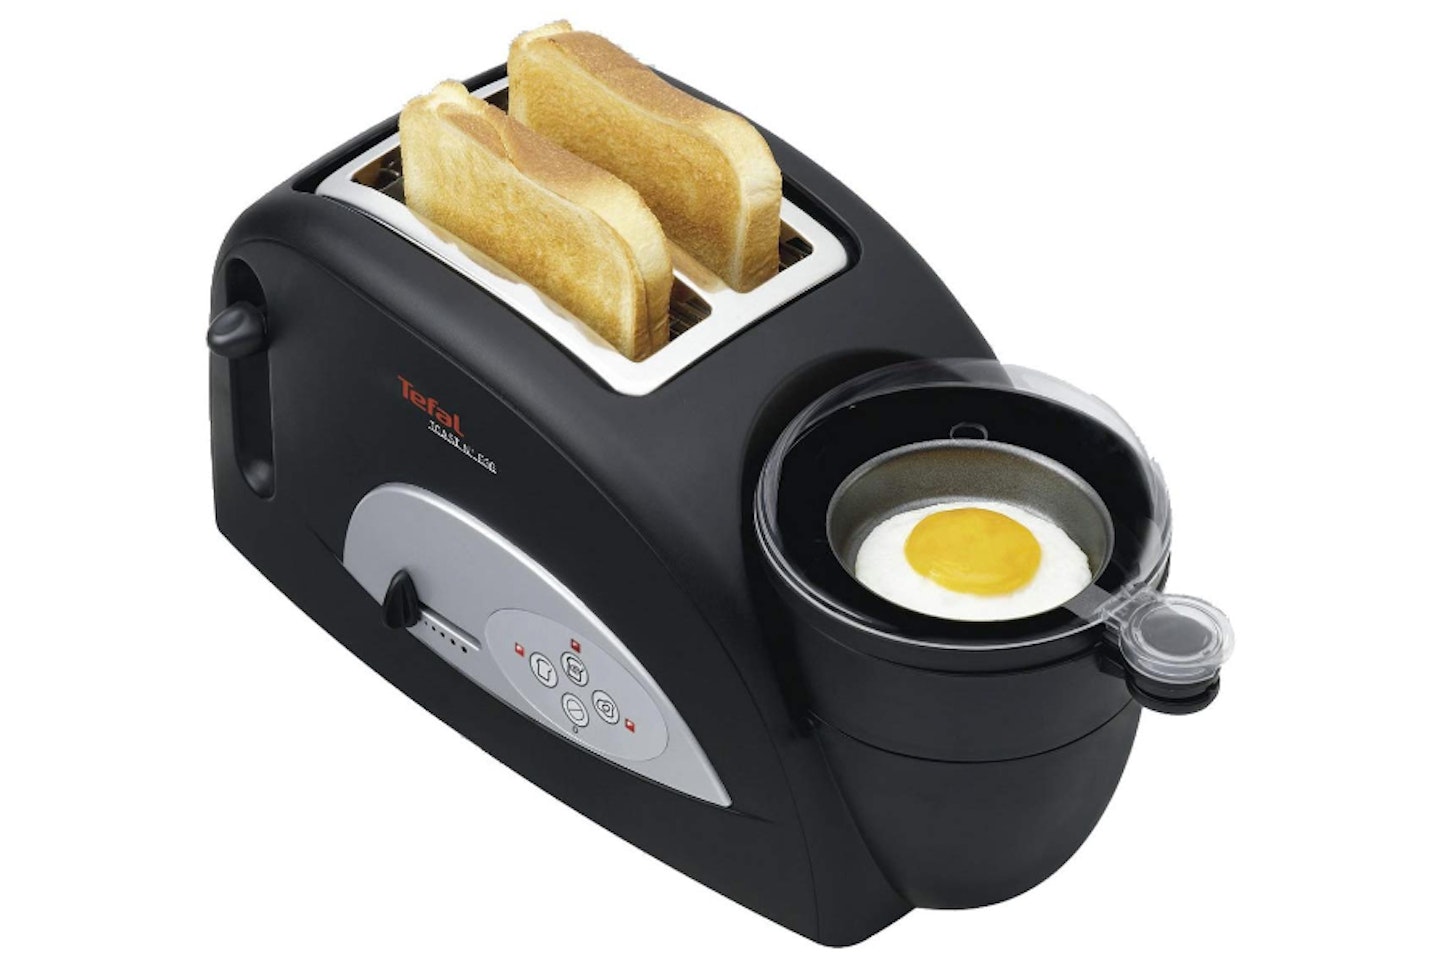 Tefal Toast N Egg Two Slice Toaster and Egg Maker